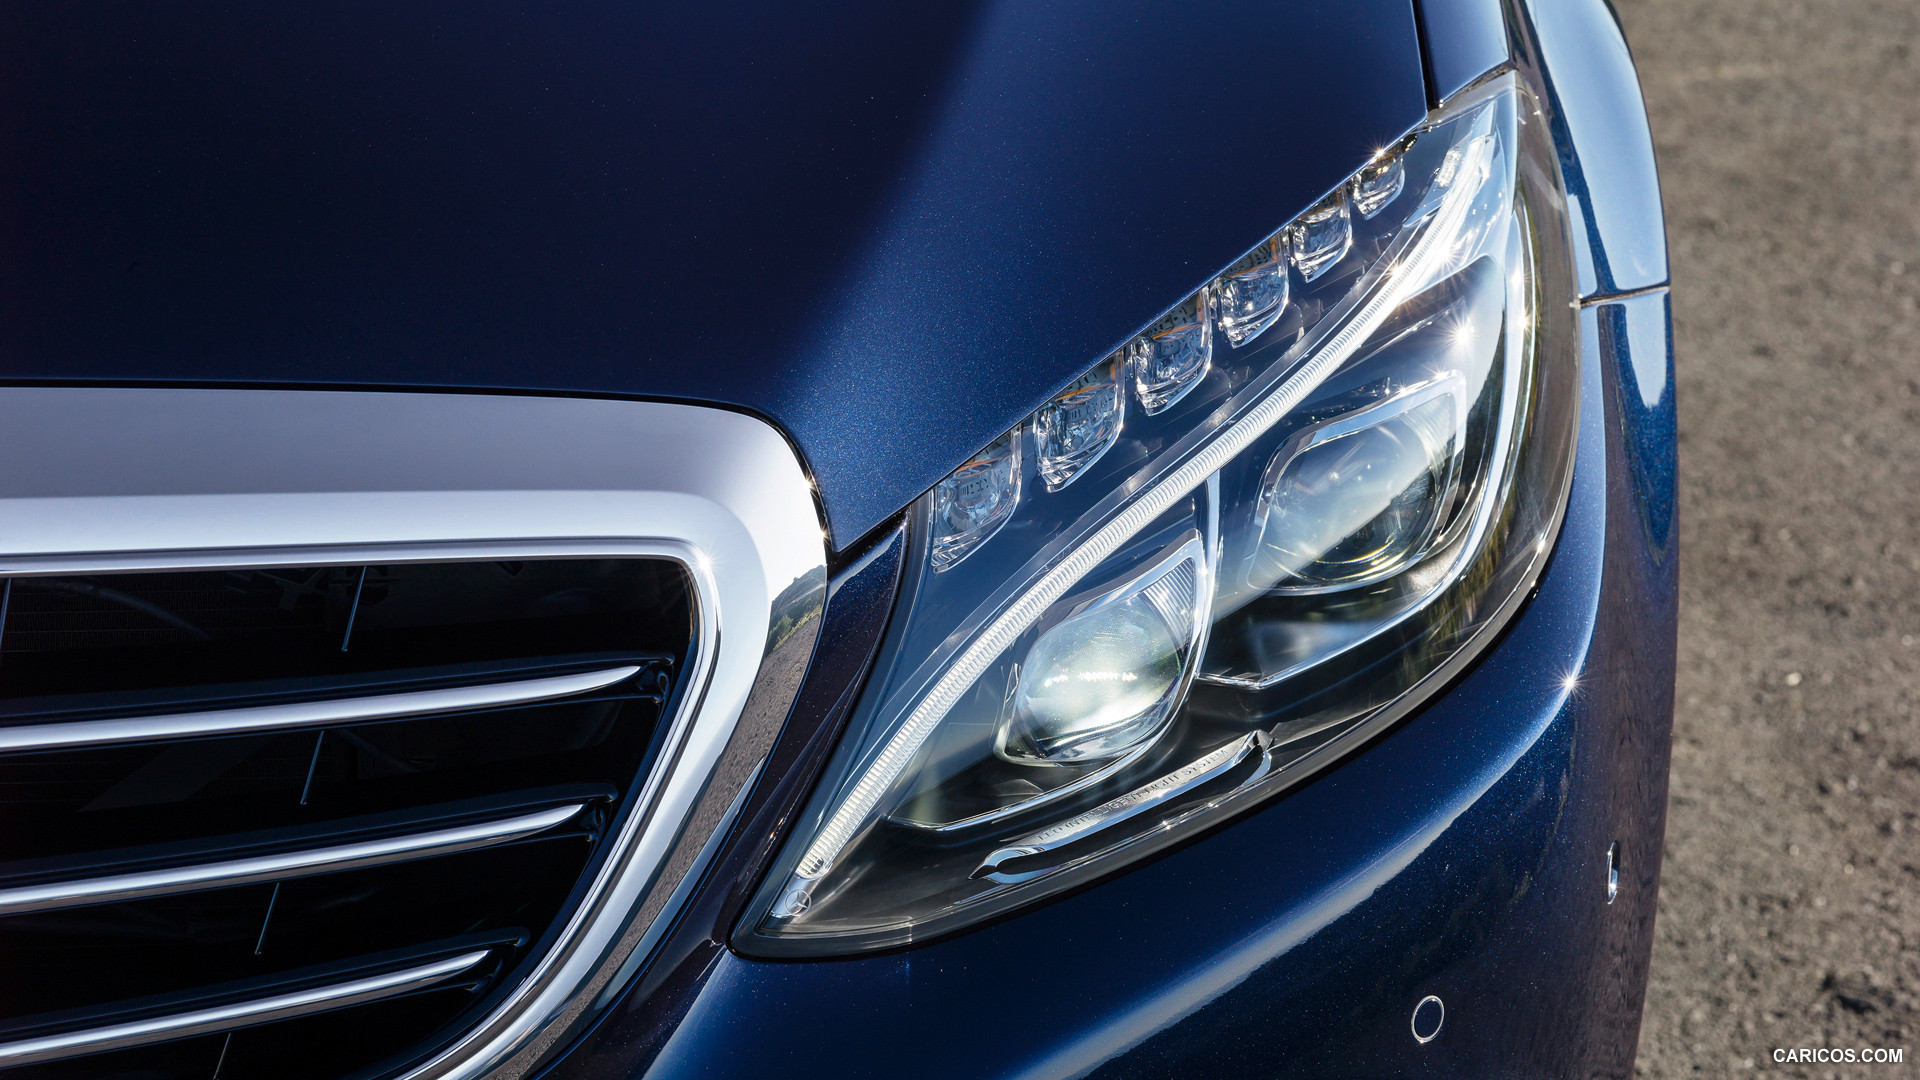 2015 Mercedes-Benz C-Class C300 BlueTEC HYBRID (Exclusiv Line) - Headlight, #150 of 181